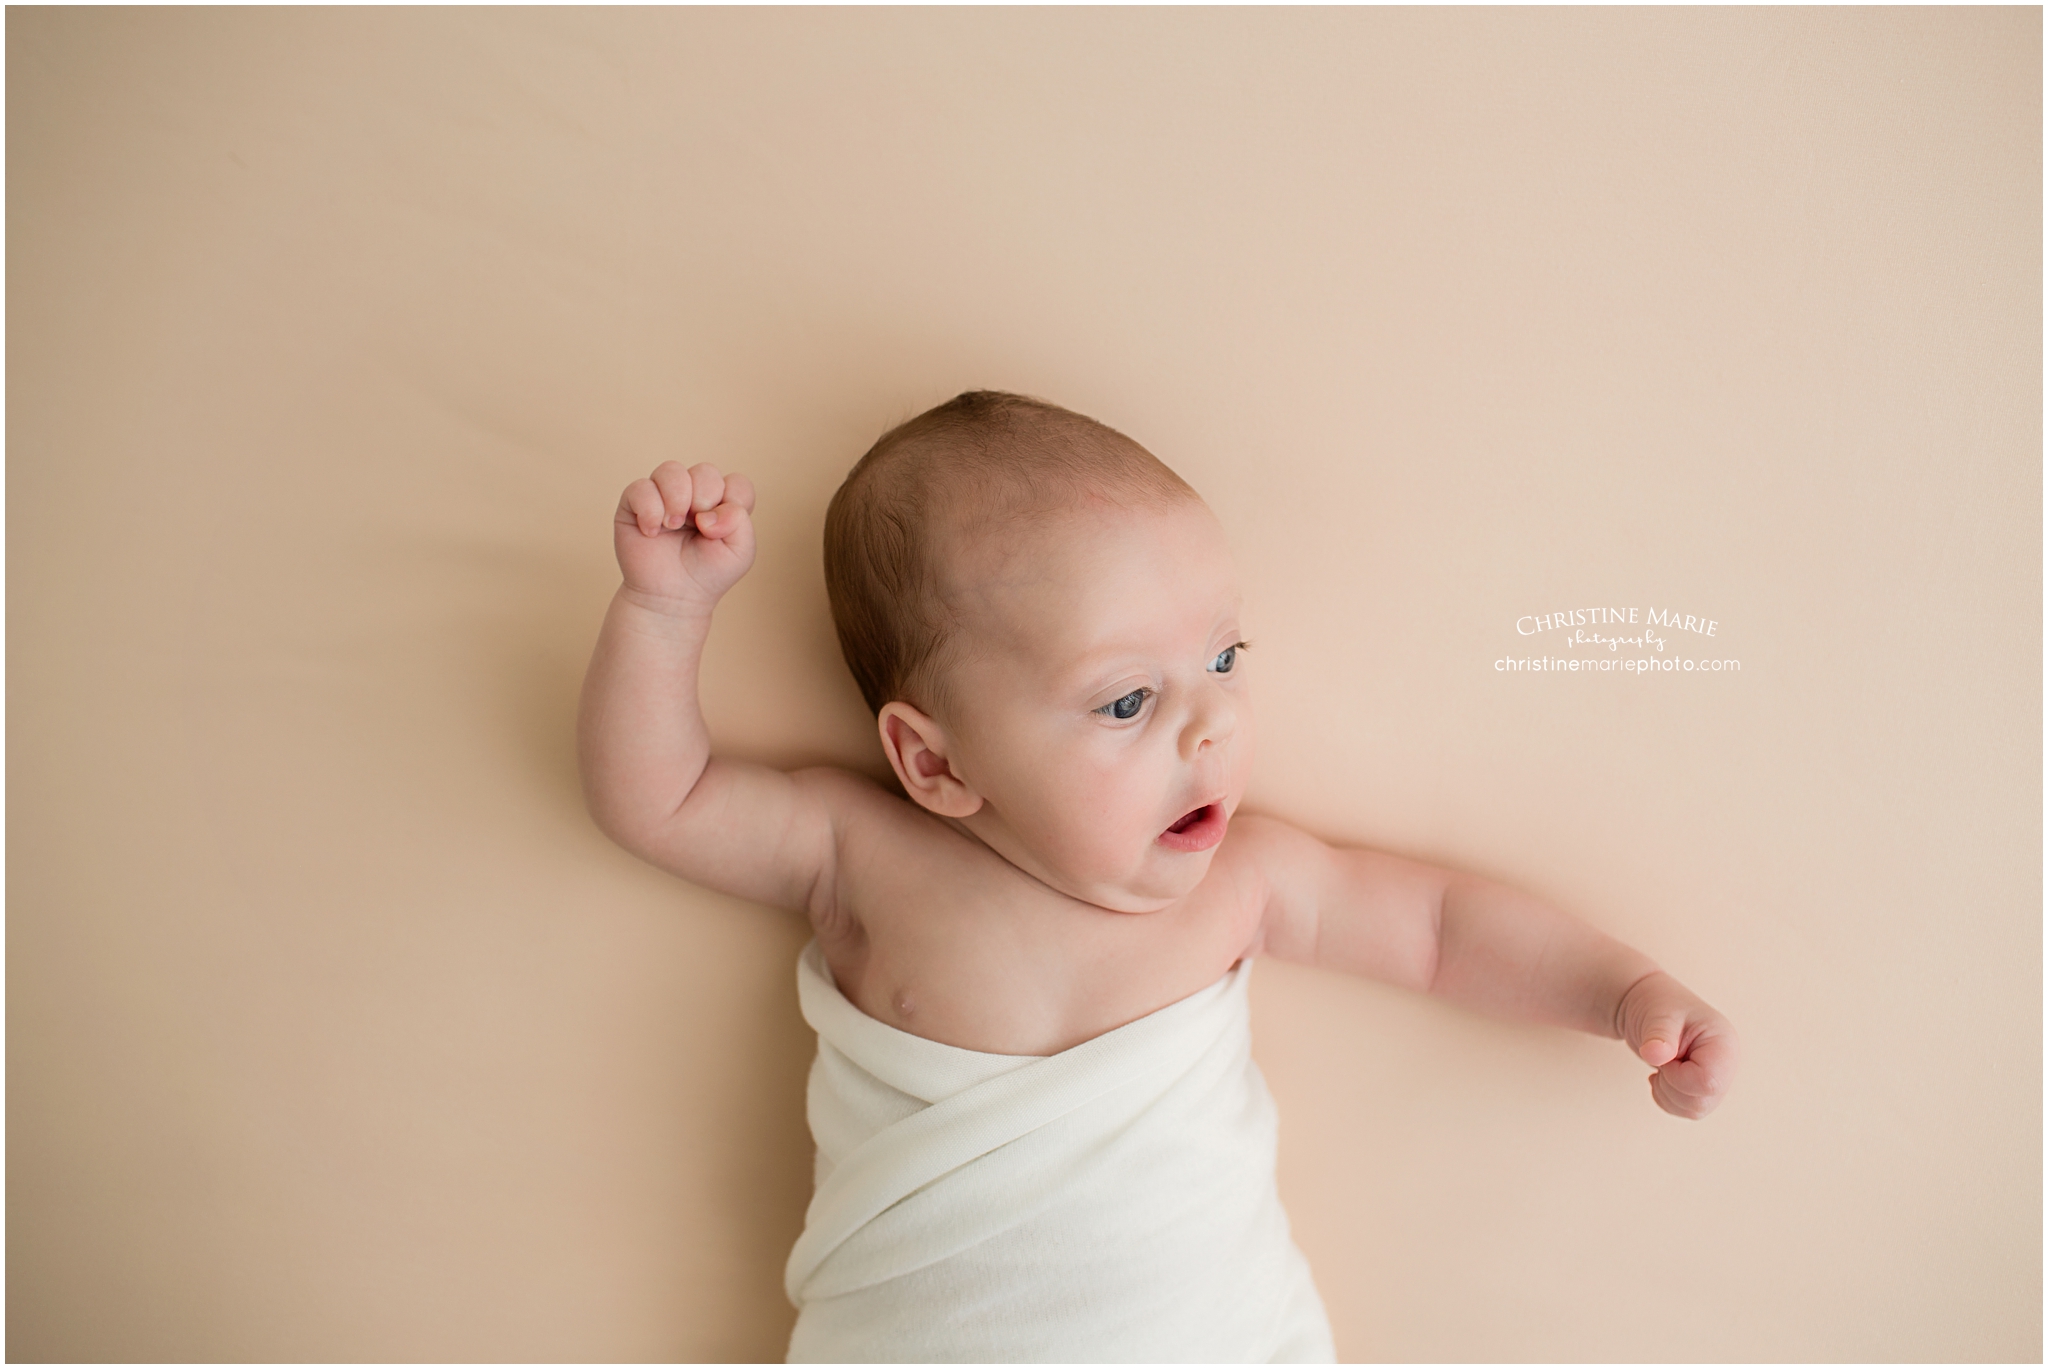 funny newborn photos with expression, cumming newborn photographer 